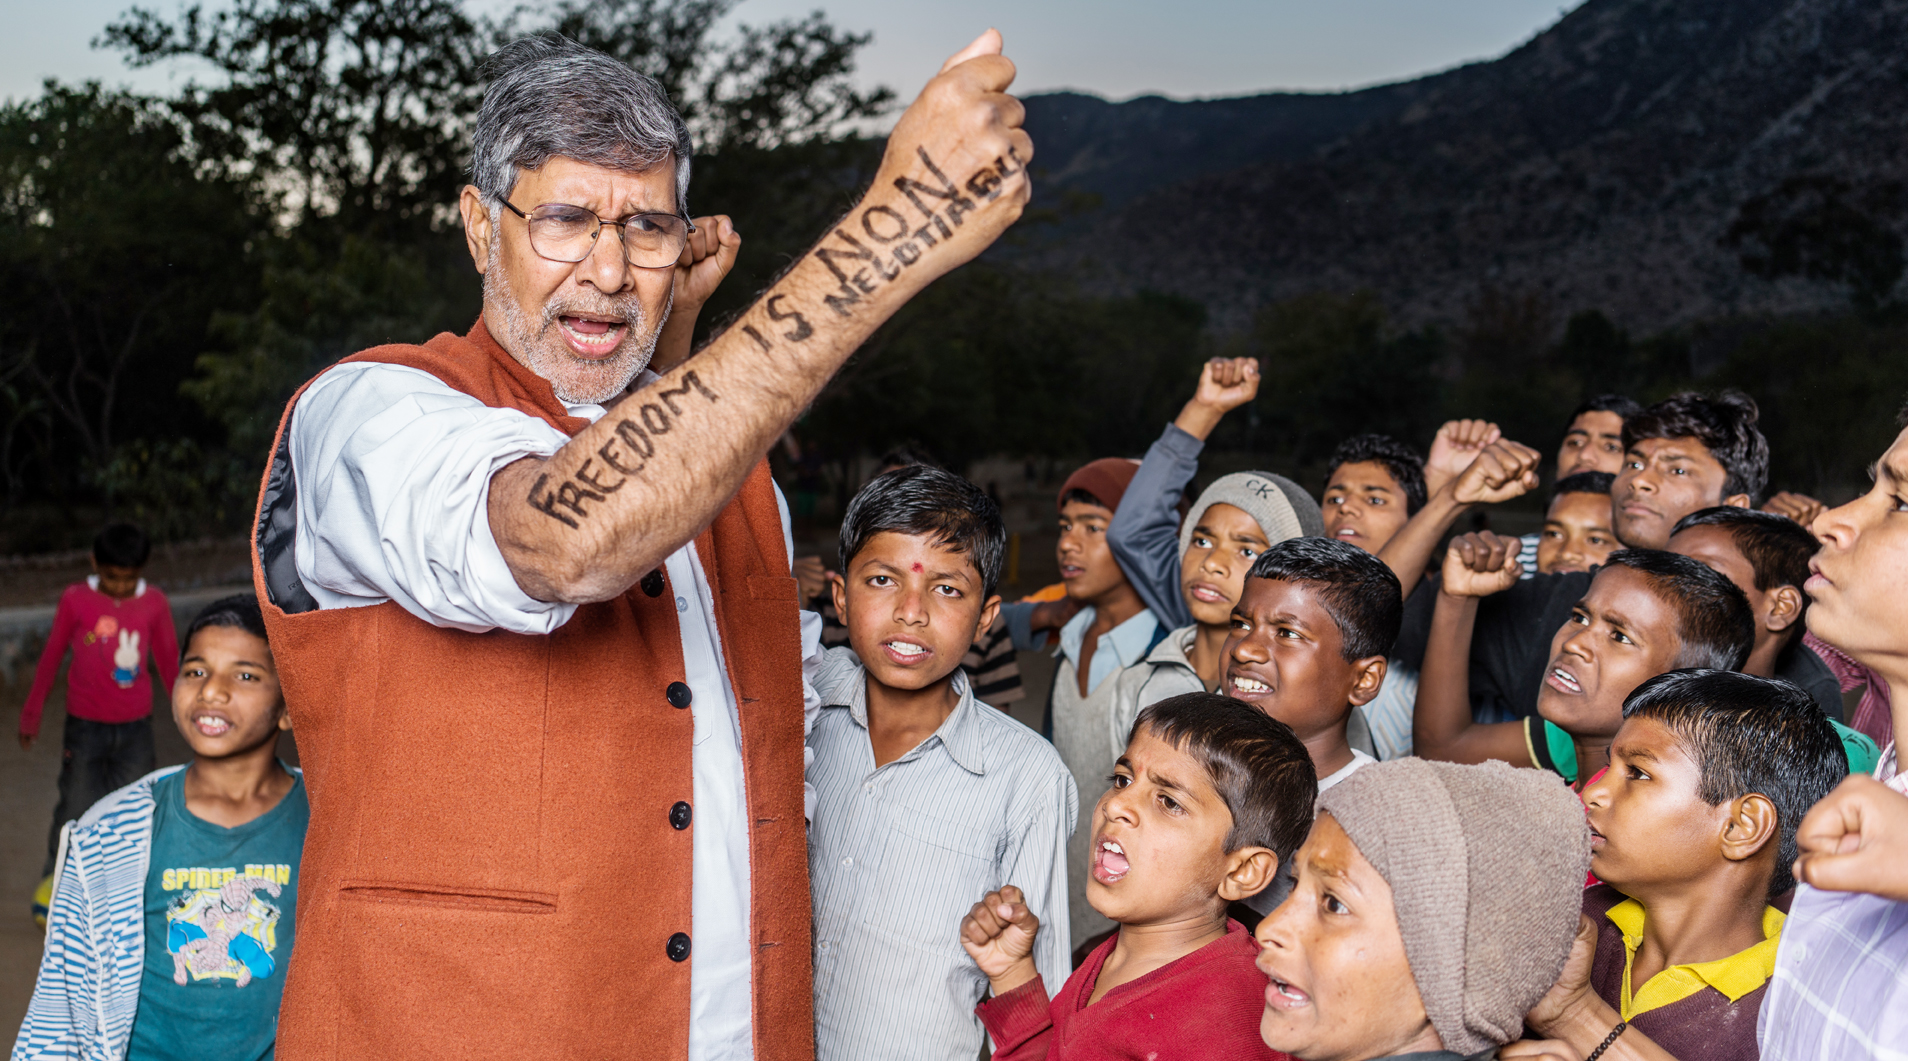 Kailash Satyarthi Children's Foundation